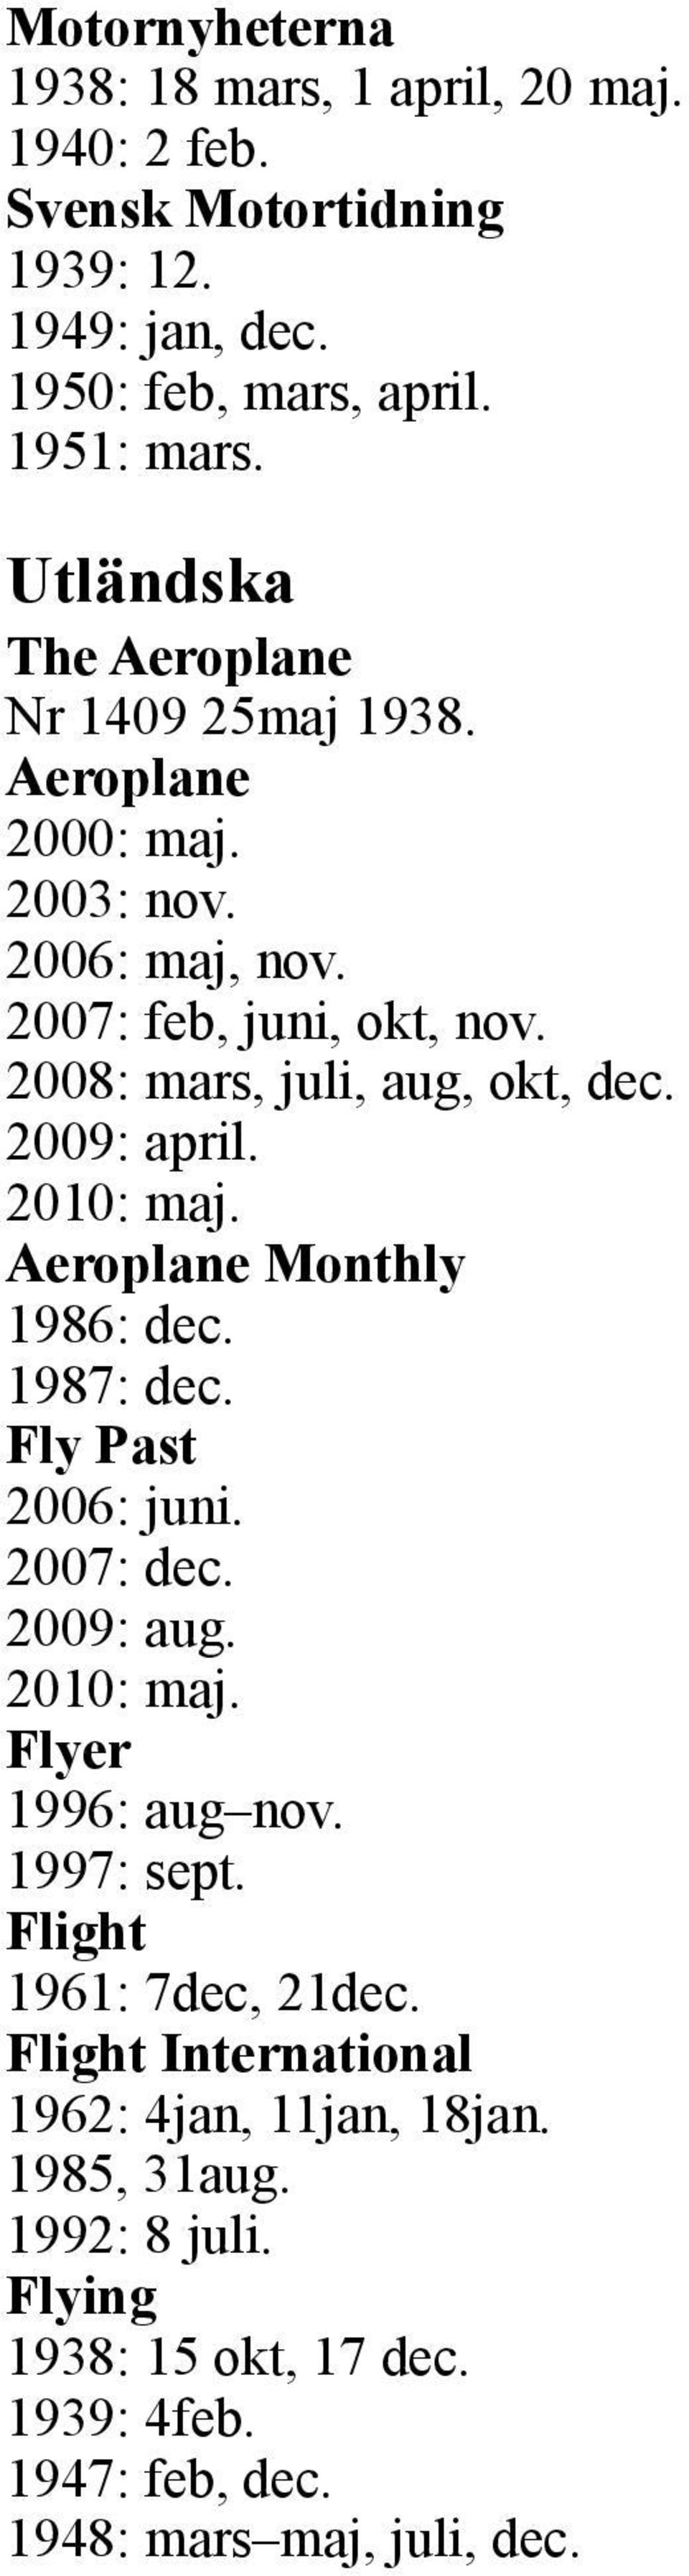 2009: april. 2010: maj. Aeroplane Monthly 1986: dec. 1987: dec. Fly Past 2006: juni. 2007: dec. 2009: aug. 2010: maj. Flyer 1996: aug nov. 1997: sept.